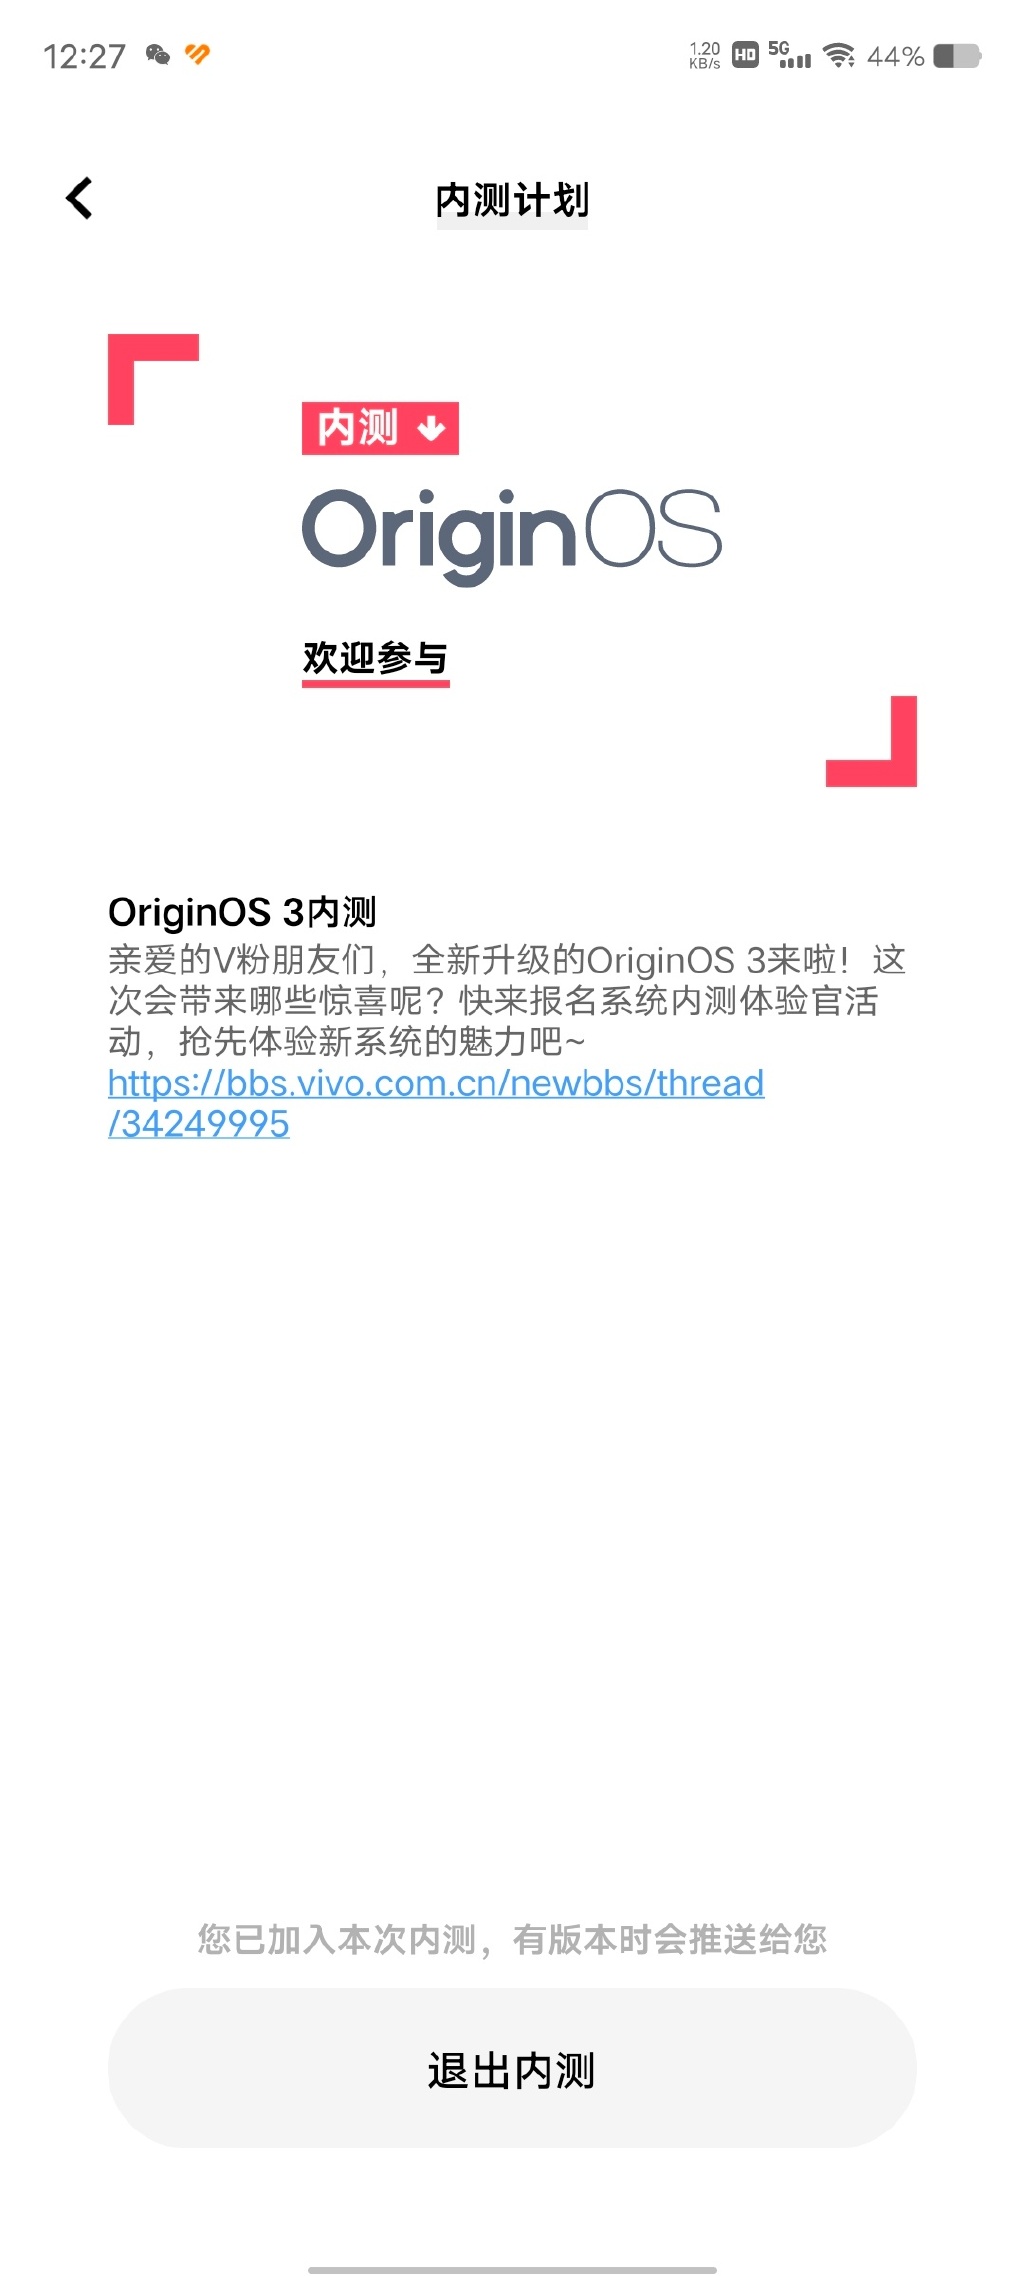 originos3.0内测申请答案分享 originos3.0内测答题答案是什么